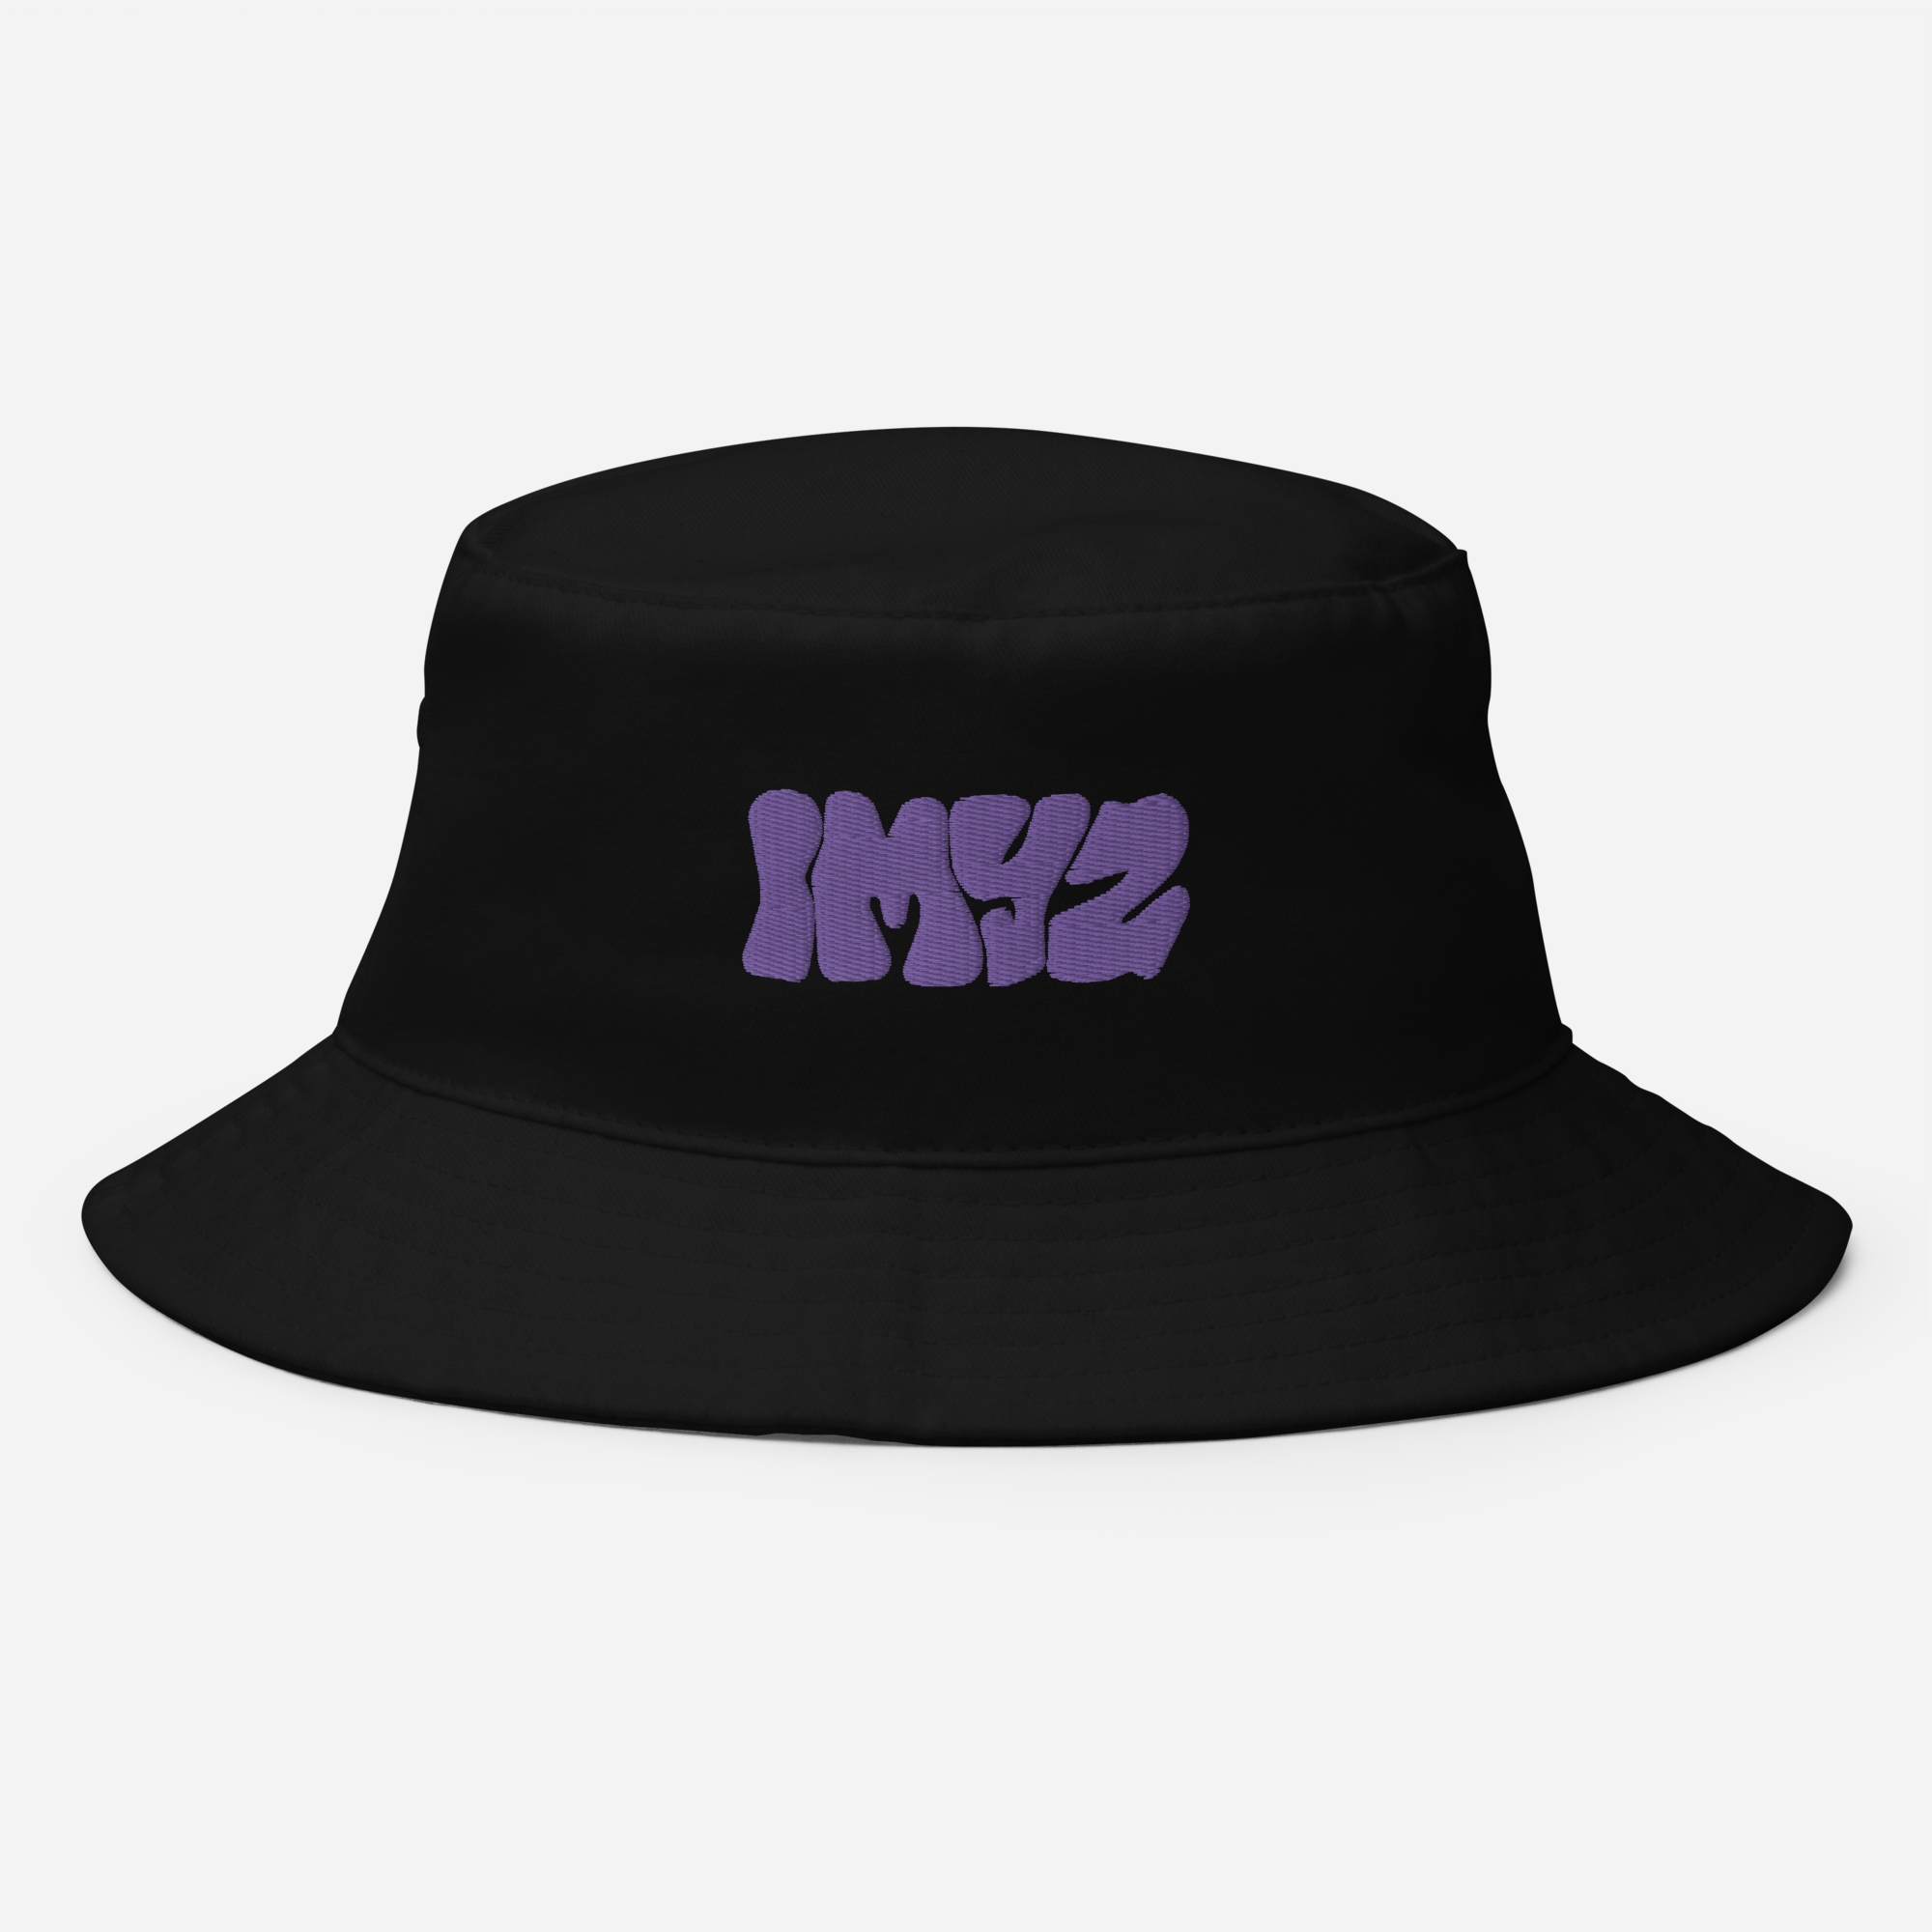 IMY2 Bucket Hat (Black/Purple)